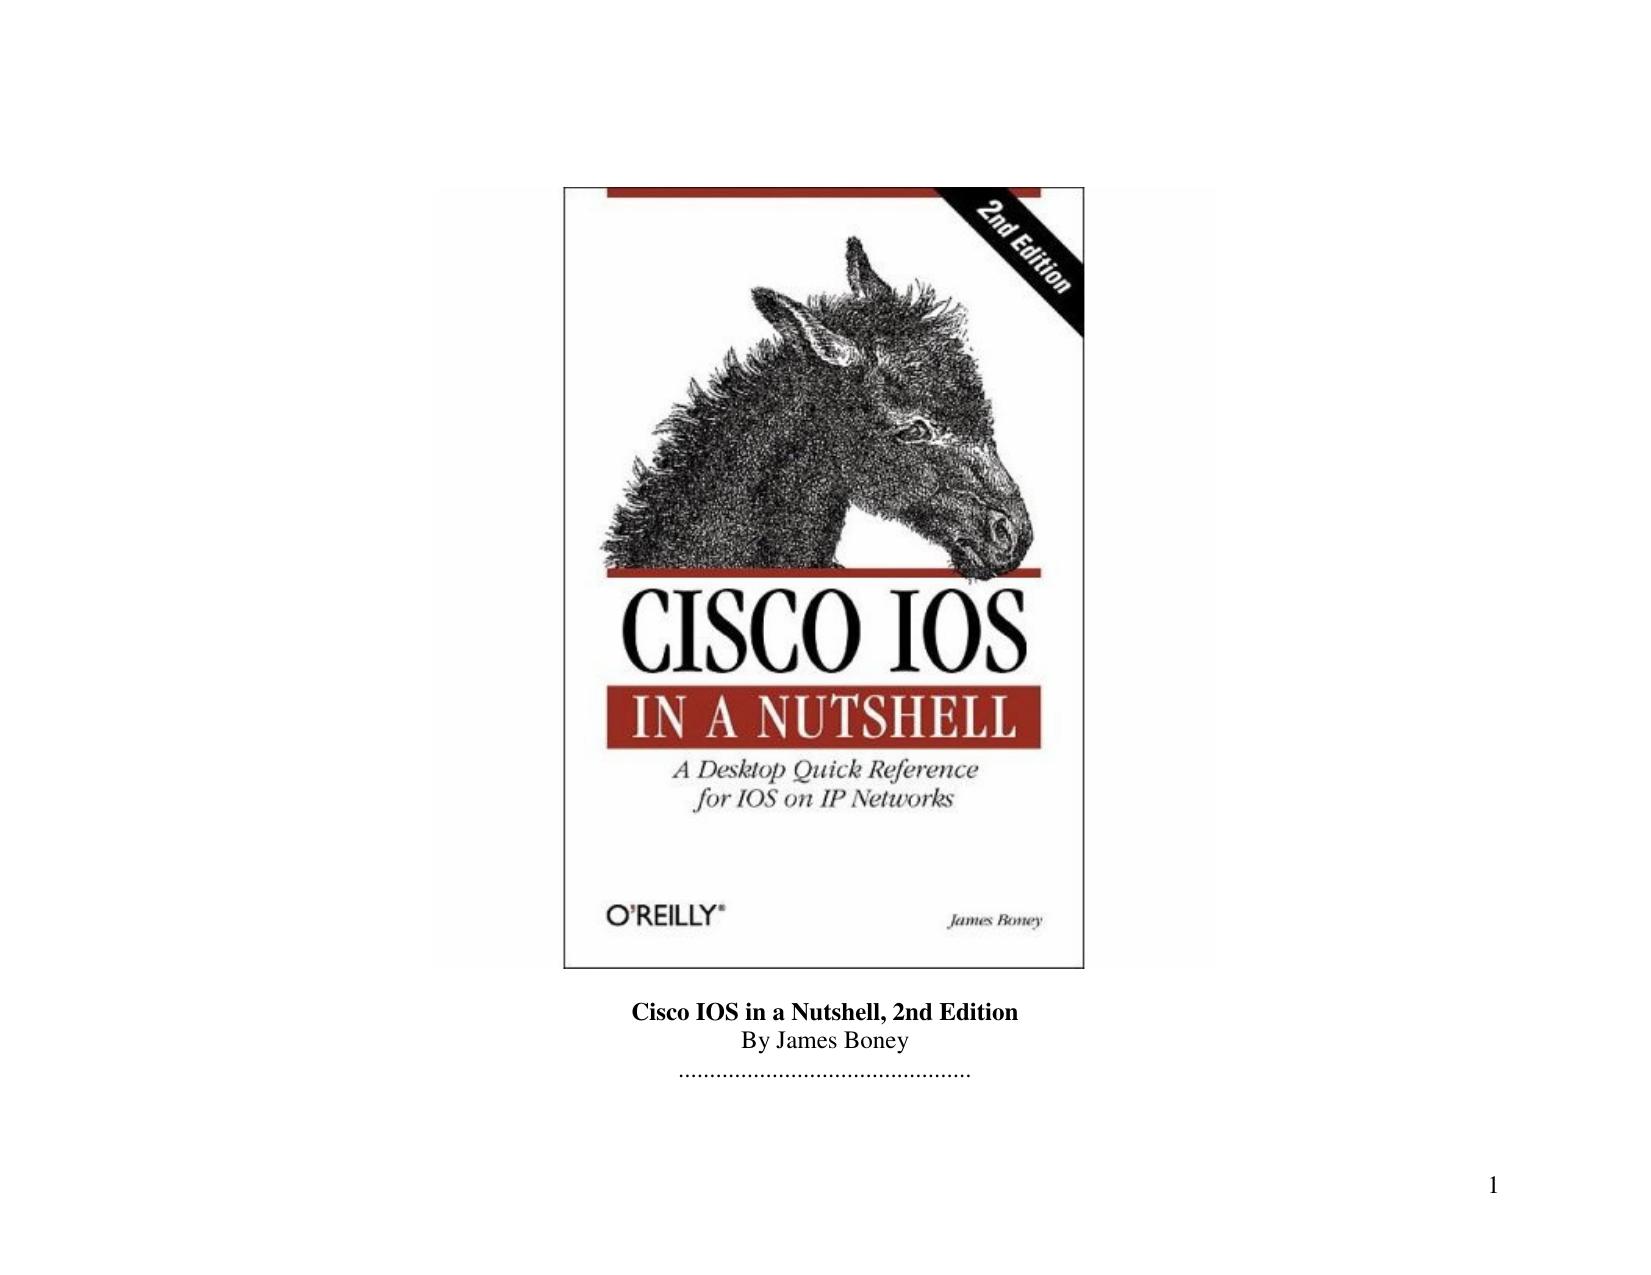 Cisco IOS in a Nutshell by James Boney